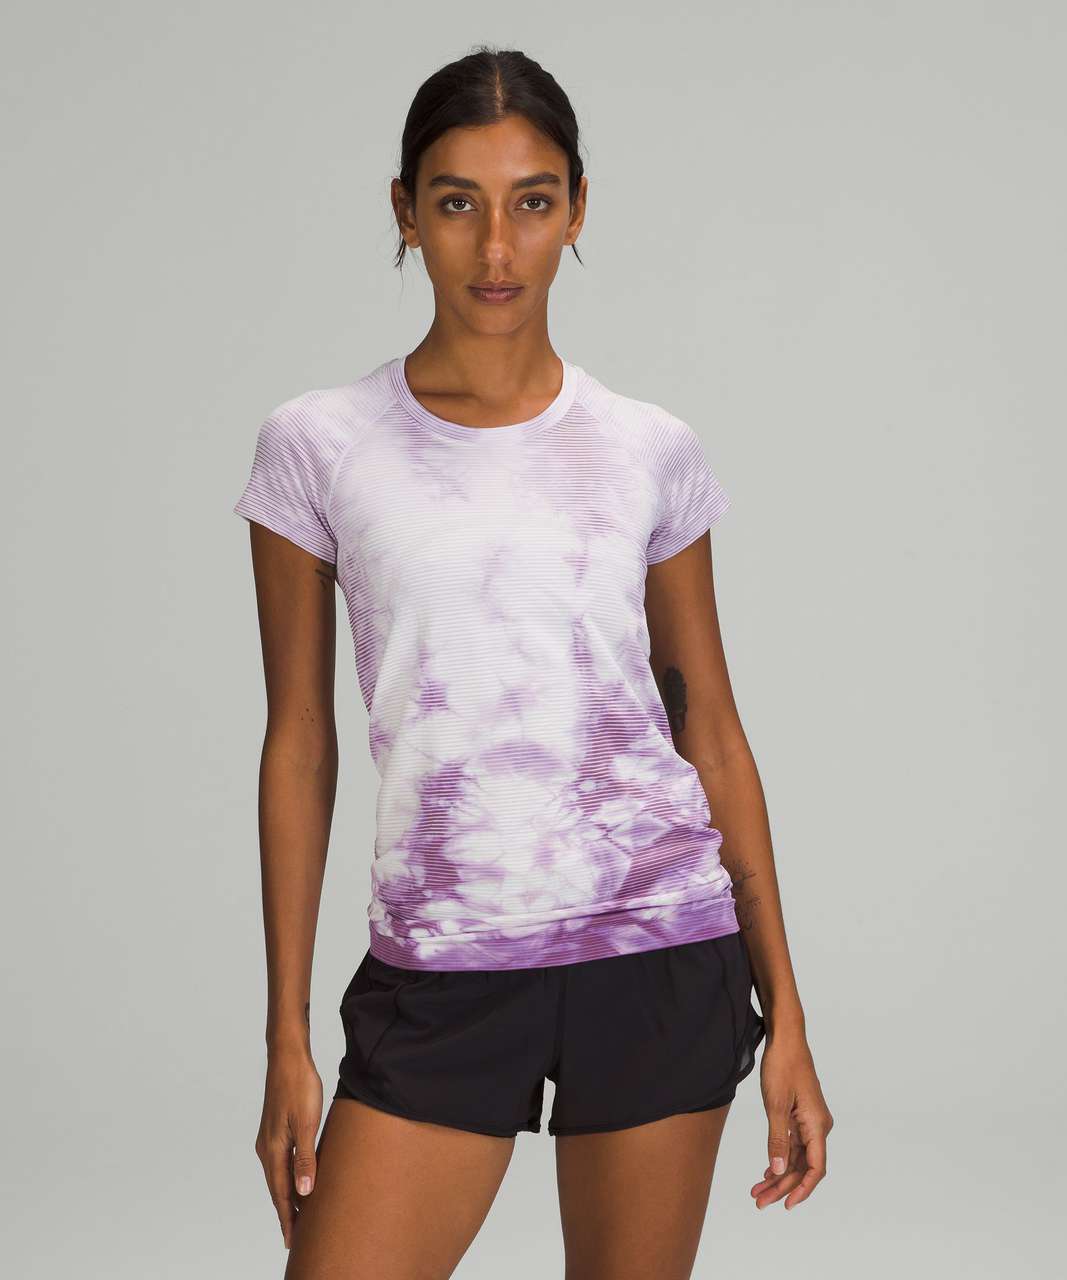 Lululemon Swiftly Tech Short Sleeve Shirt 2.0 - Shibori Stripe Wisteria Purple